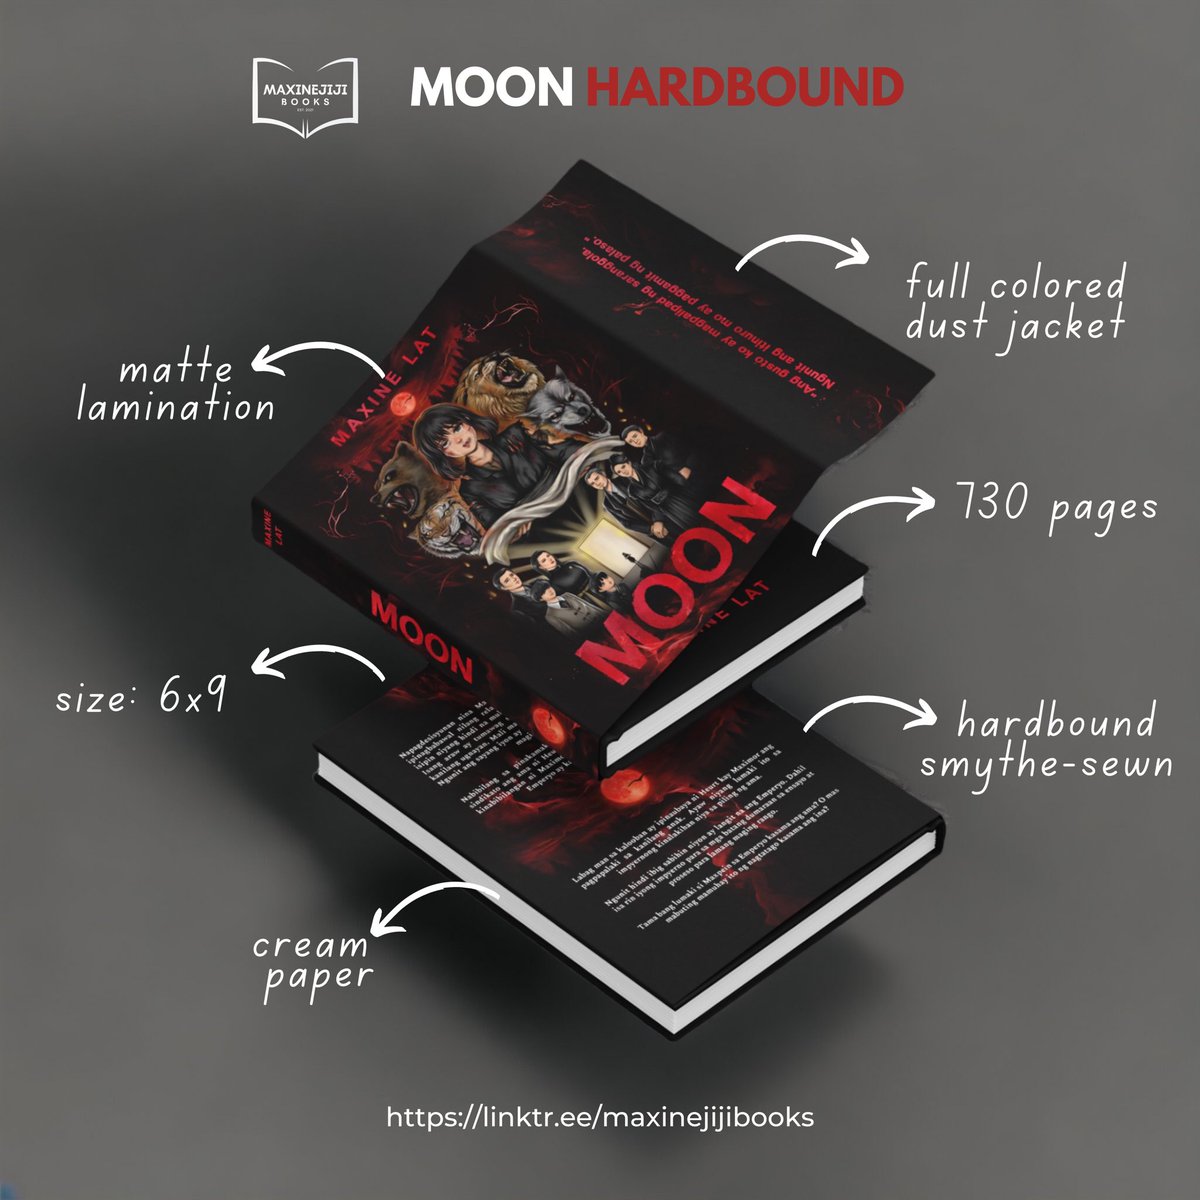 Pre-order here: bit.ly/MoonHardbound #MoonHardbound